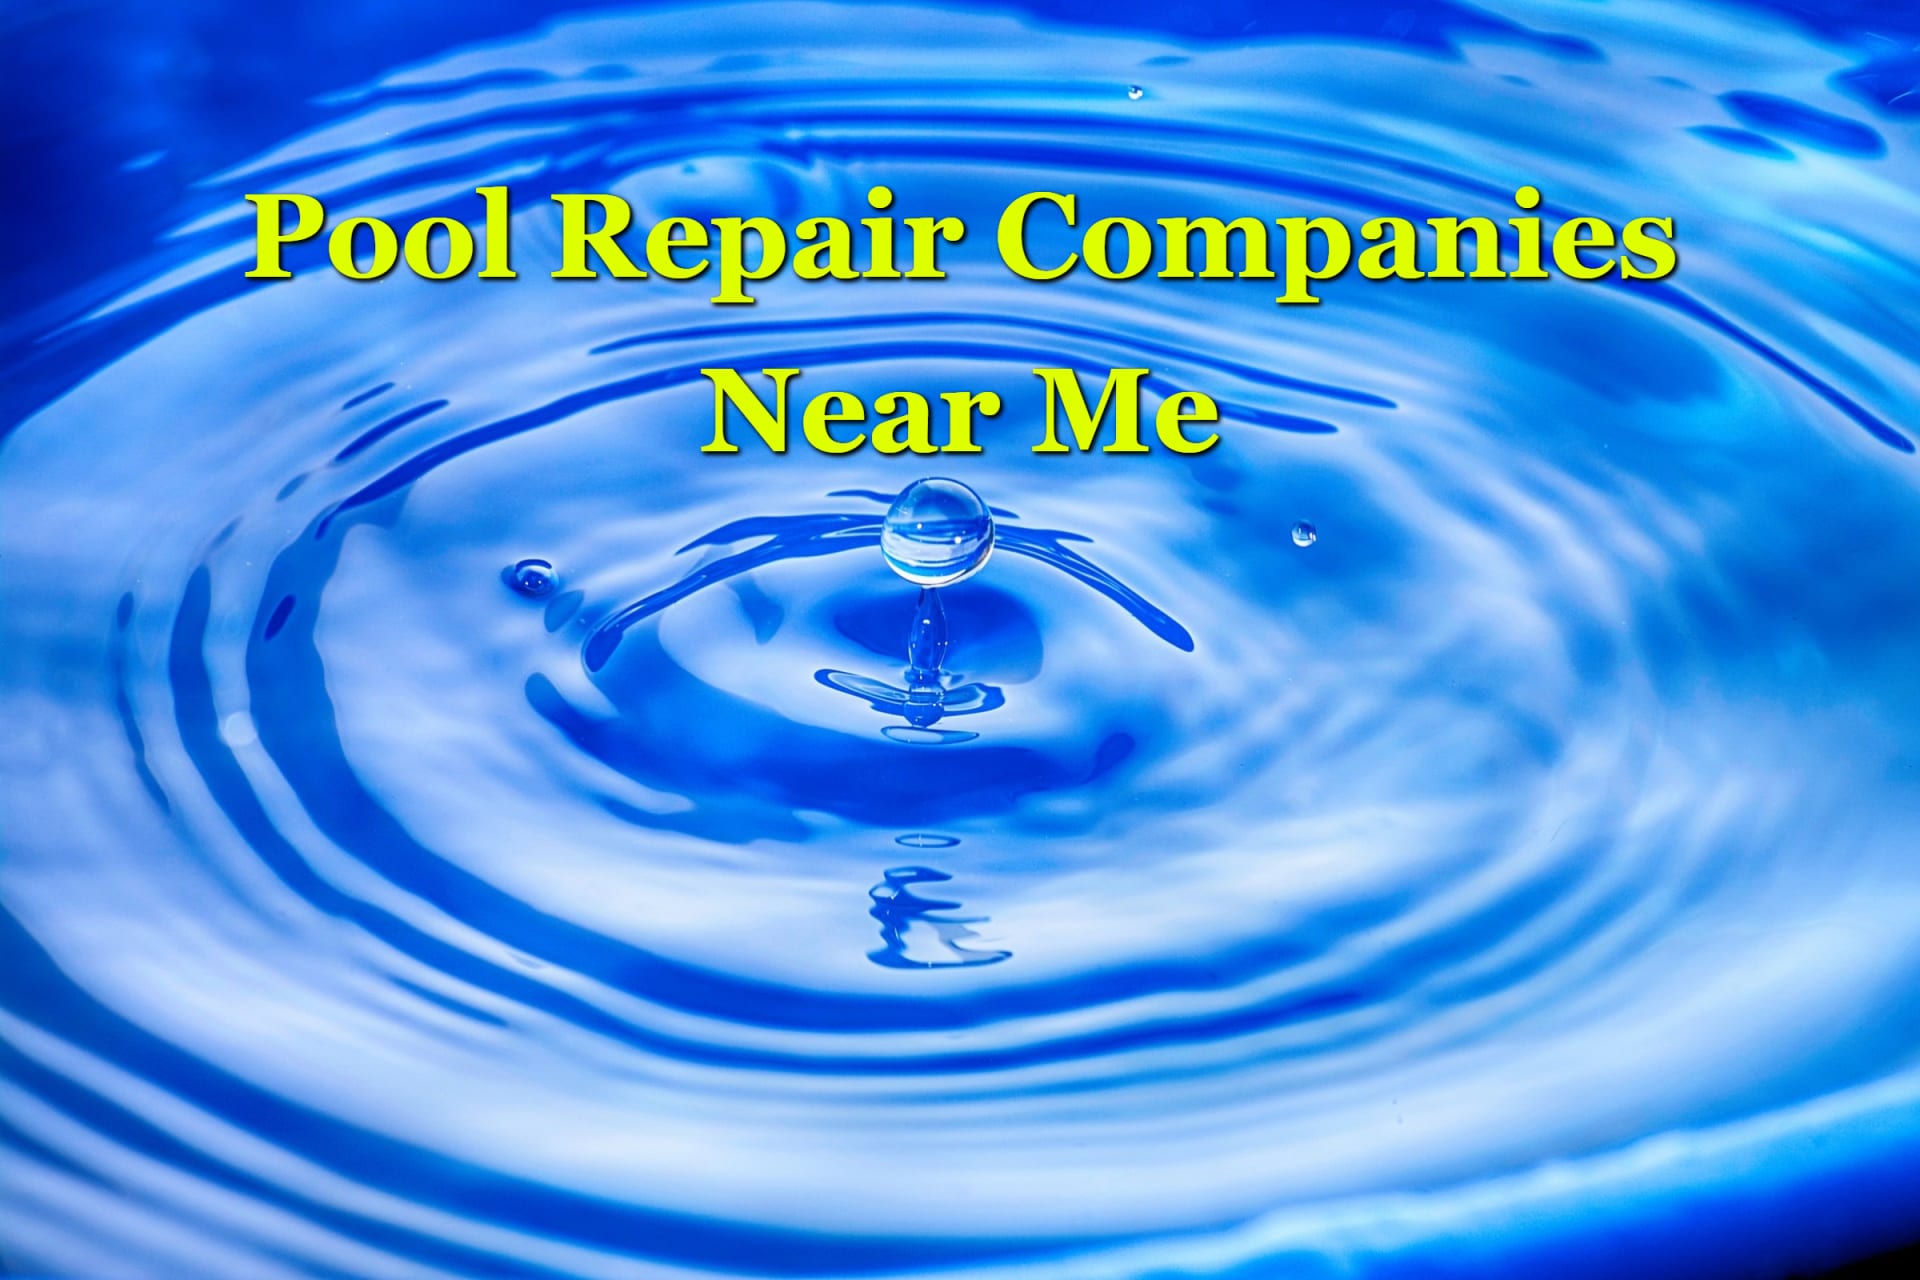 A swimming pool in need of pool repair companies